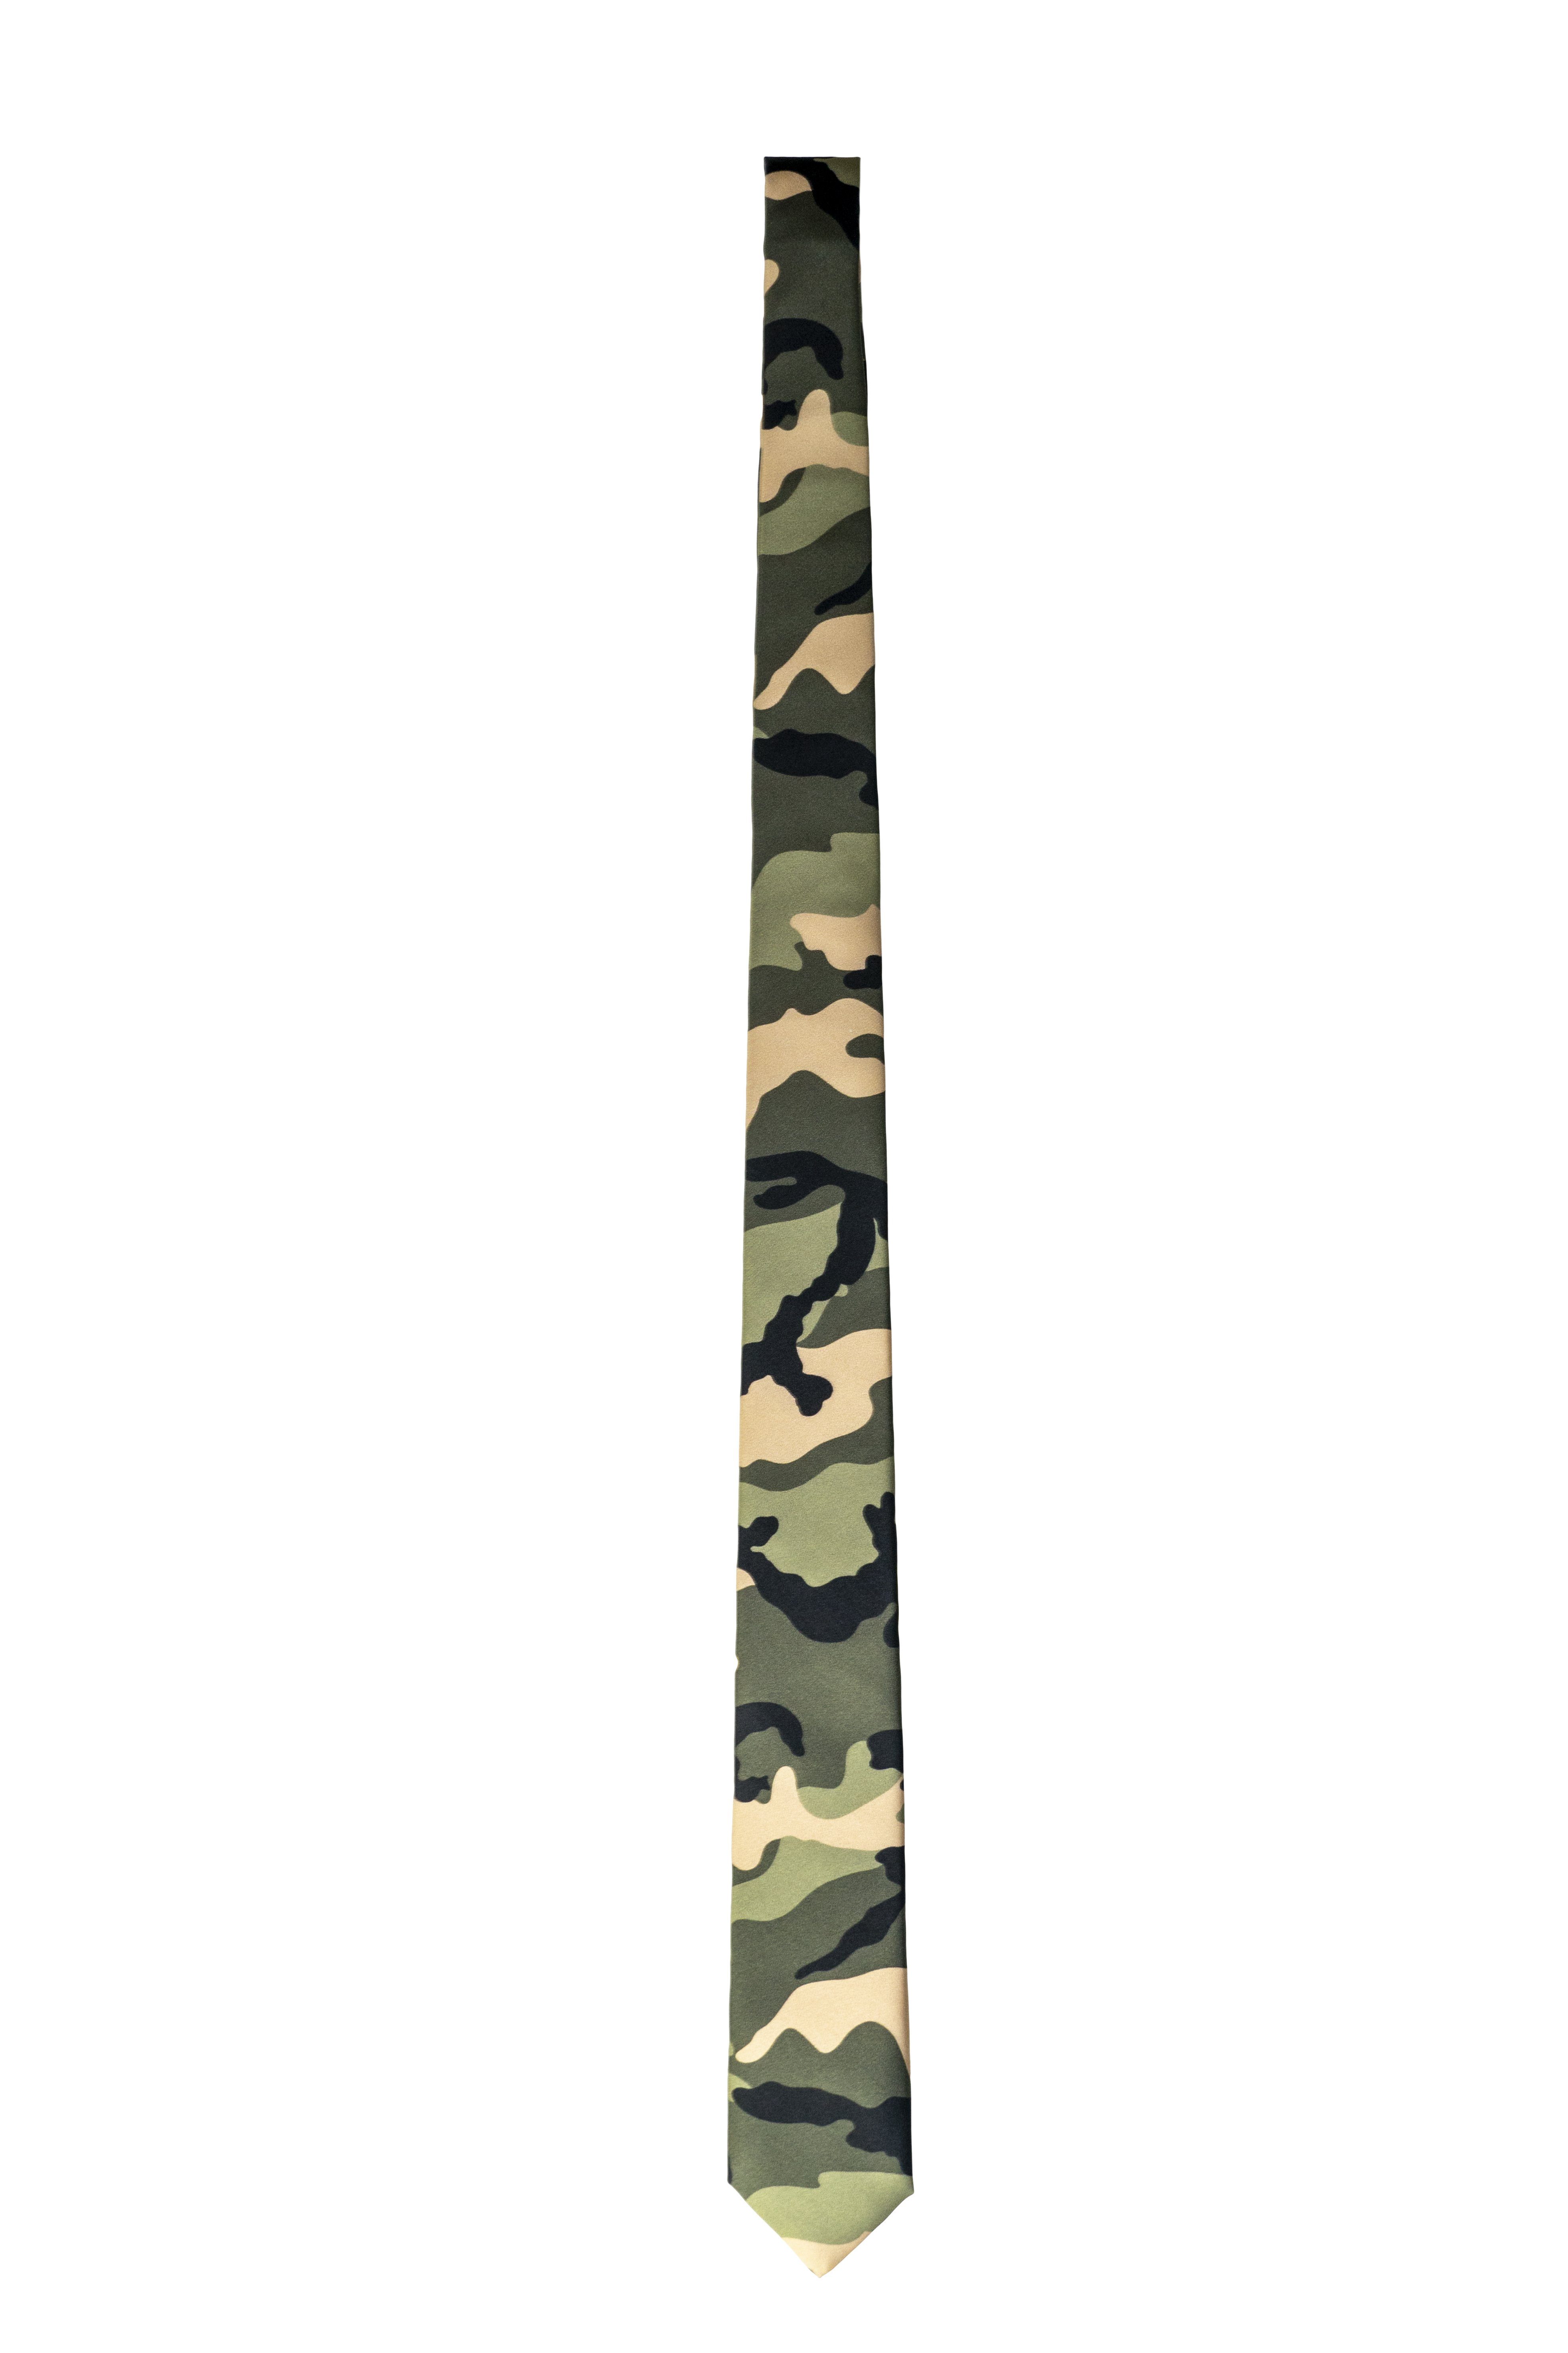 Chiccheria Camouflage Brand in Krawatte aus Made Seide, Italy